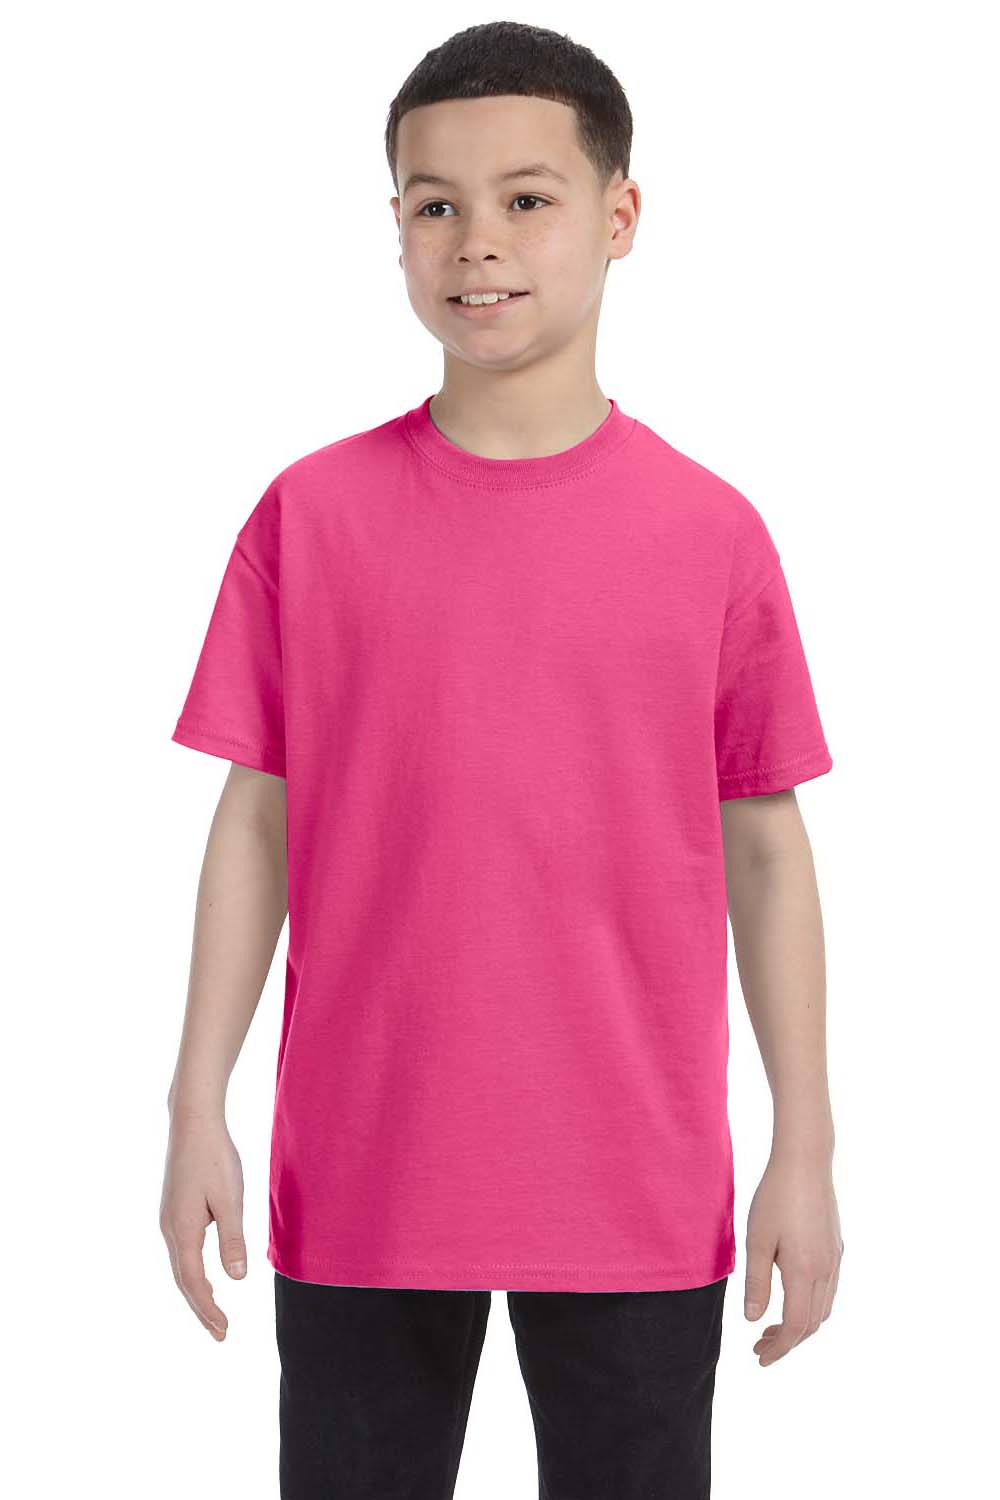 Hanes 54500 Youth ComfortSoft Short Sleeve Crewneck T-Shirt Wow Pink Front